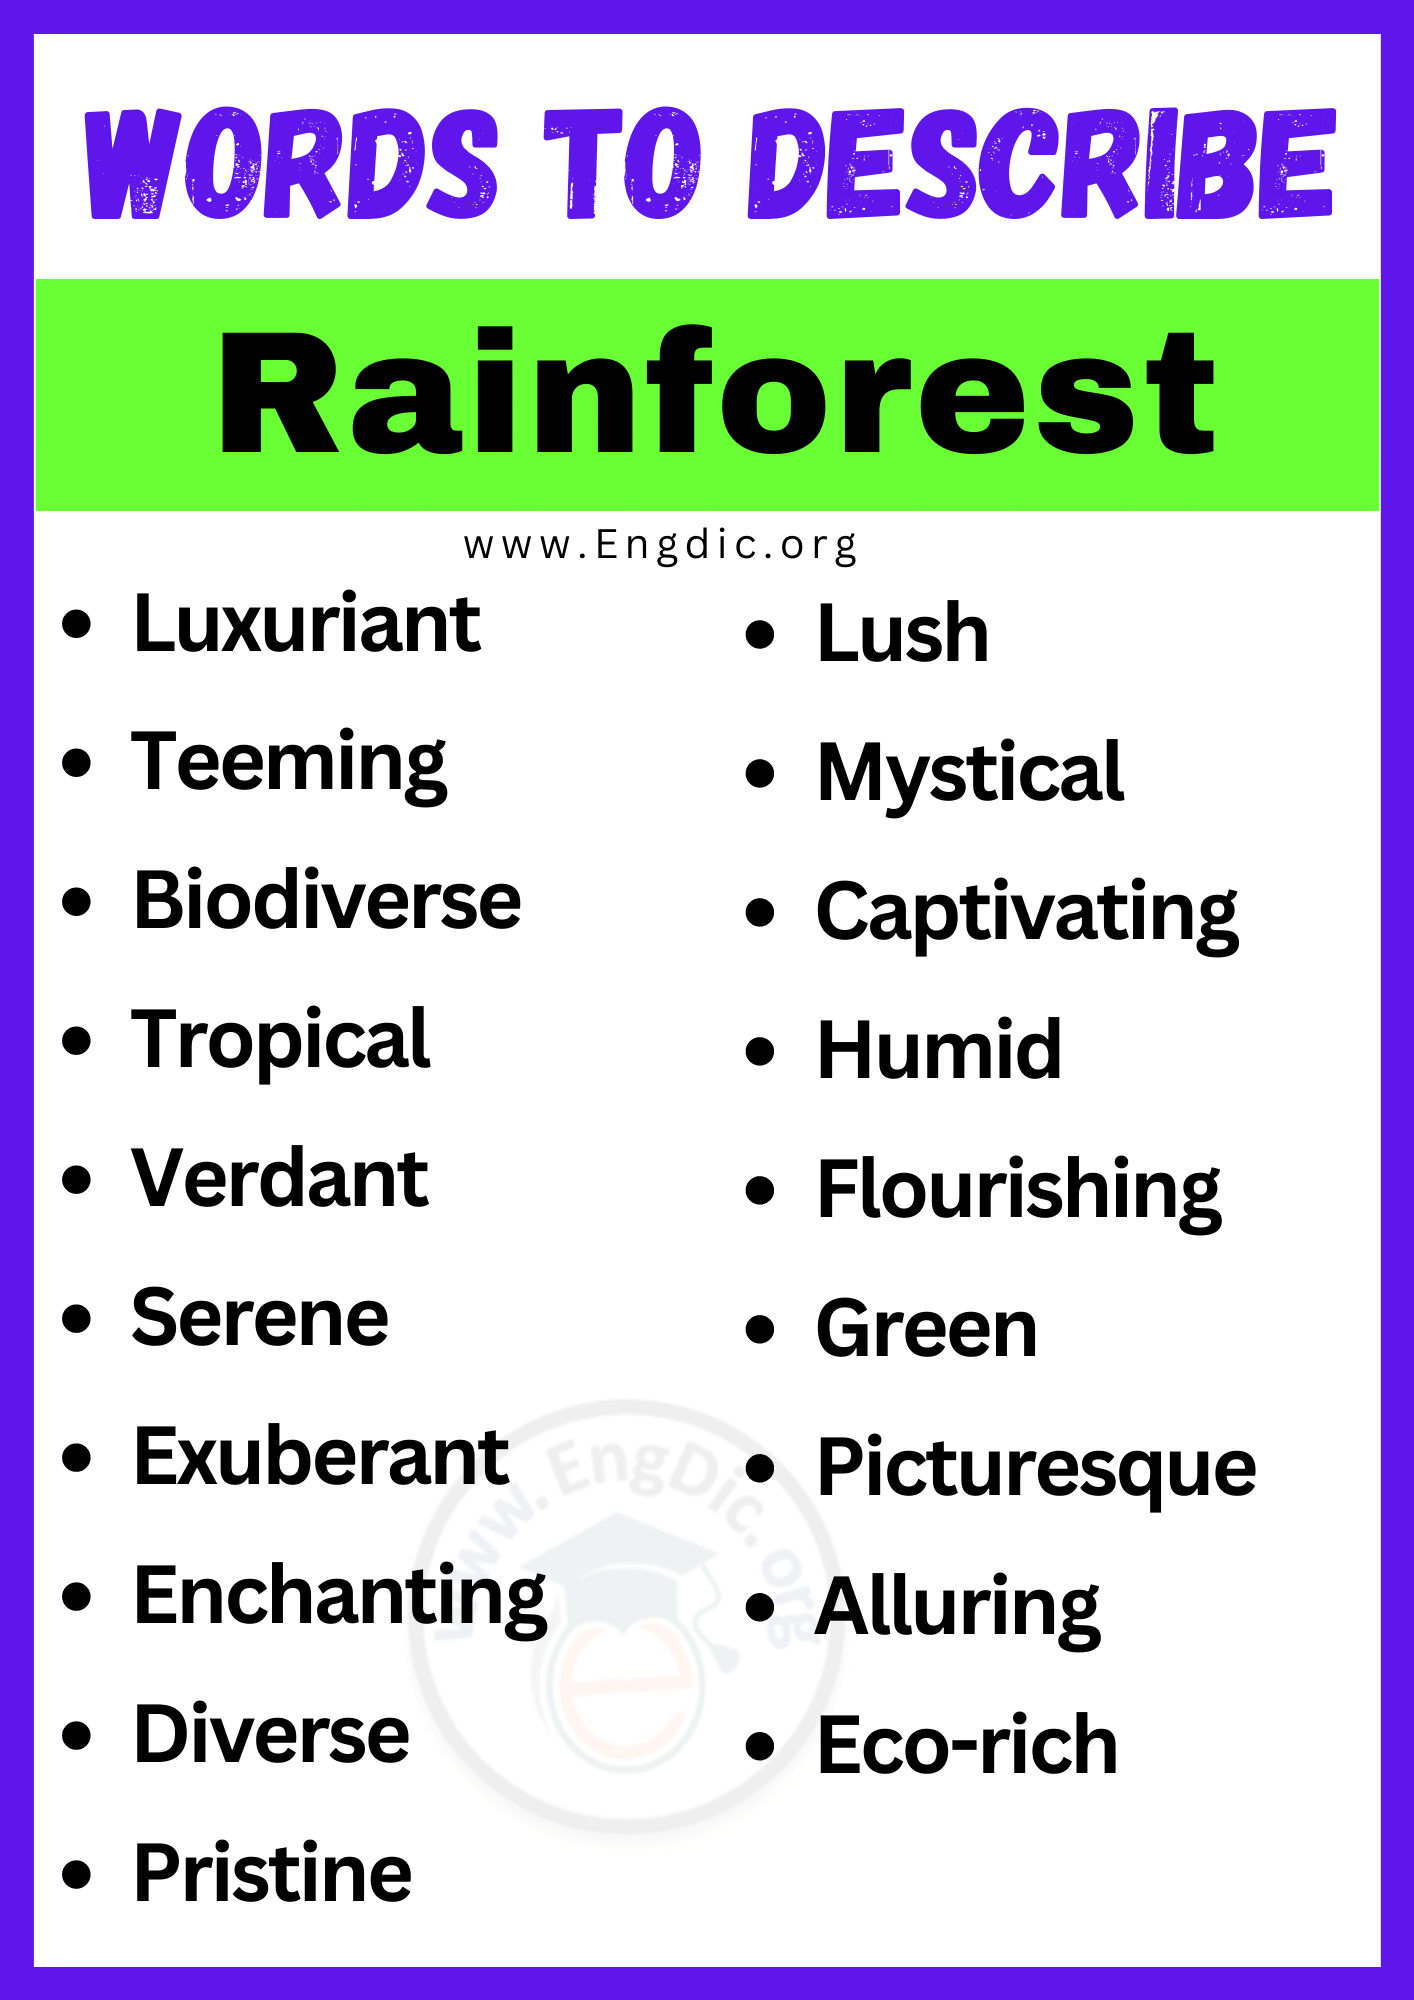 Words to Describe Rainforest